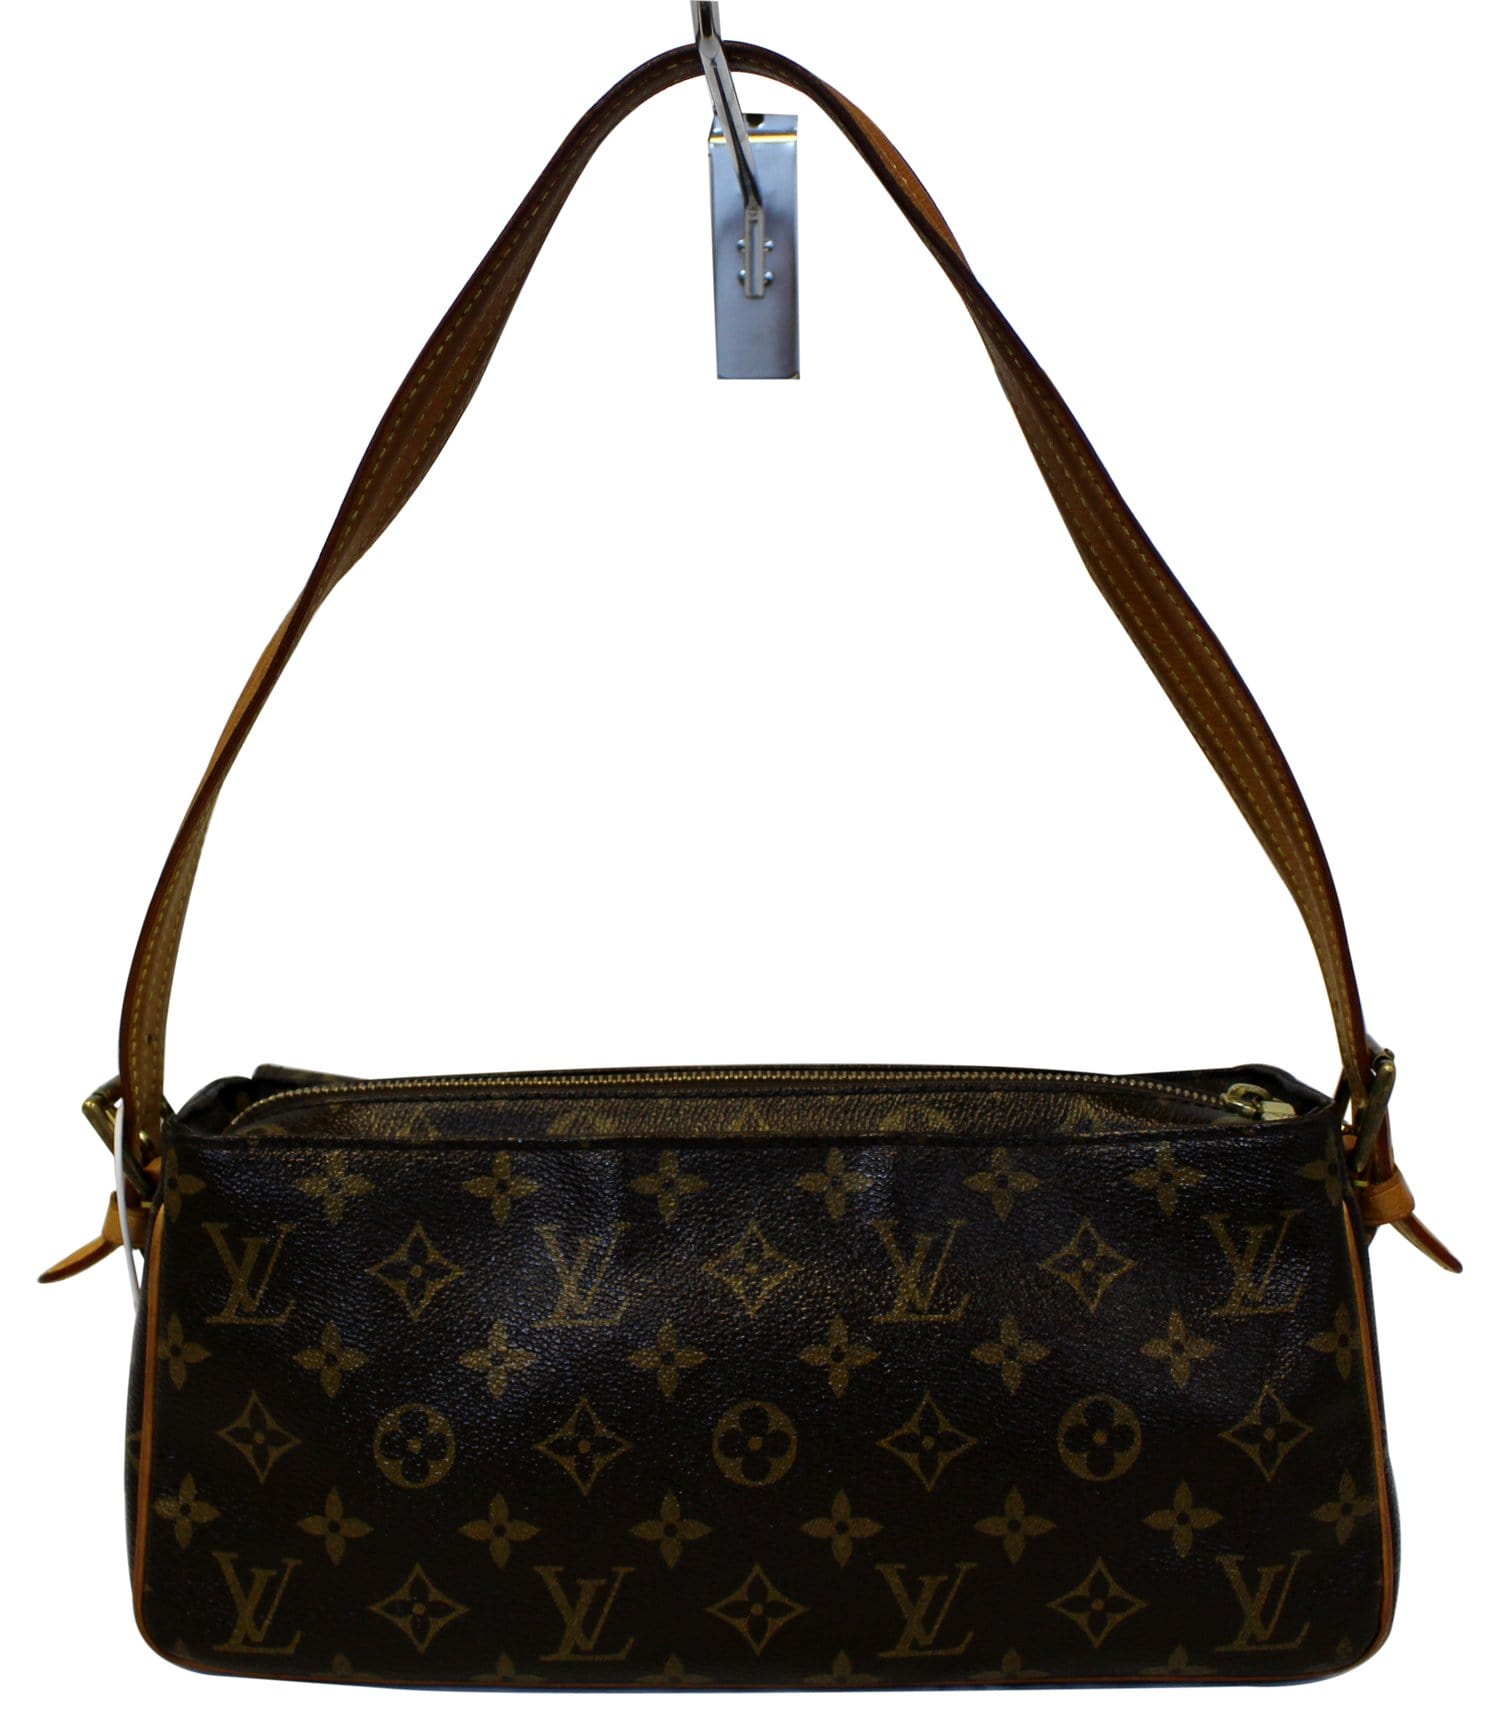 Louis Vuitton Viva Cite MM shoulder bag in LV Monogram coated